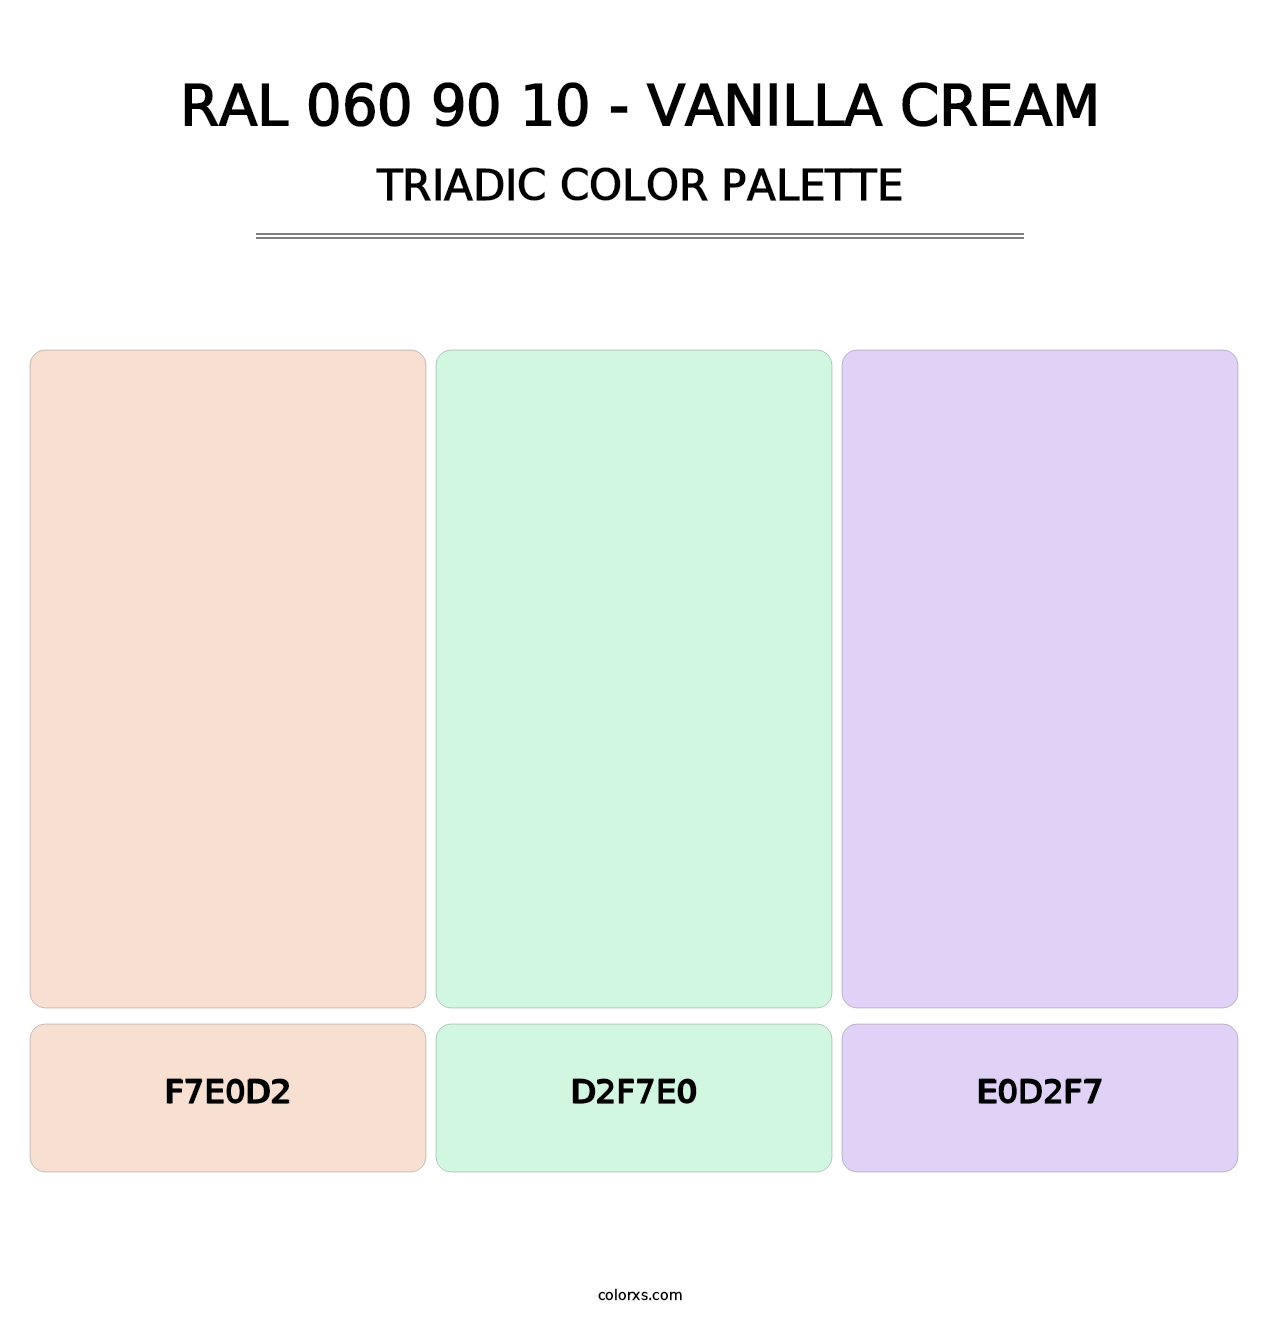 RAL 060 90 10 - Vanilla Cream - Triadic Color Palette